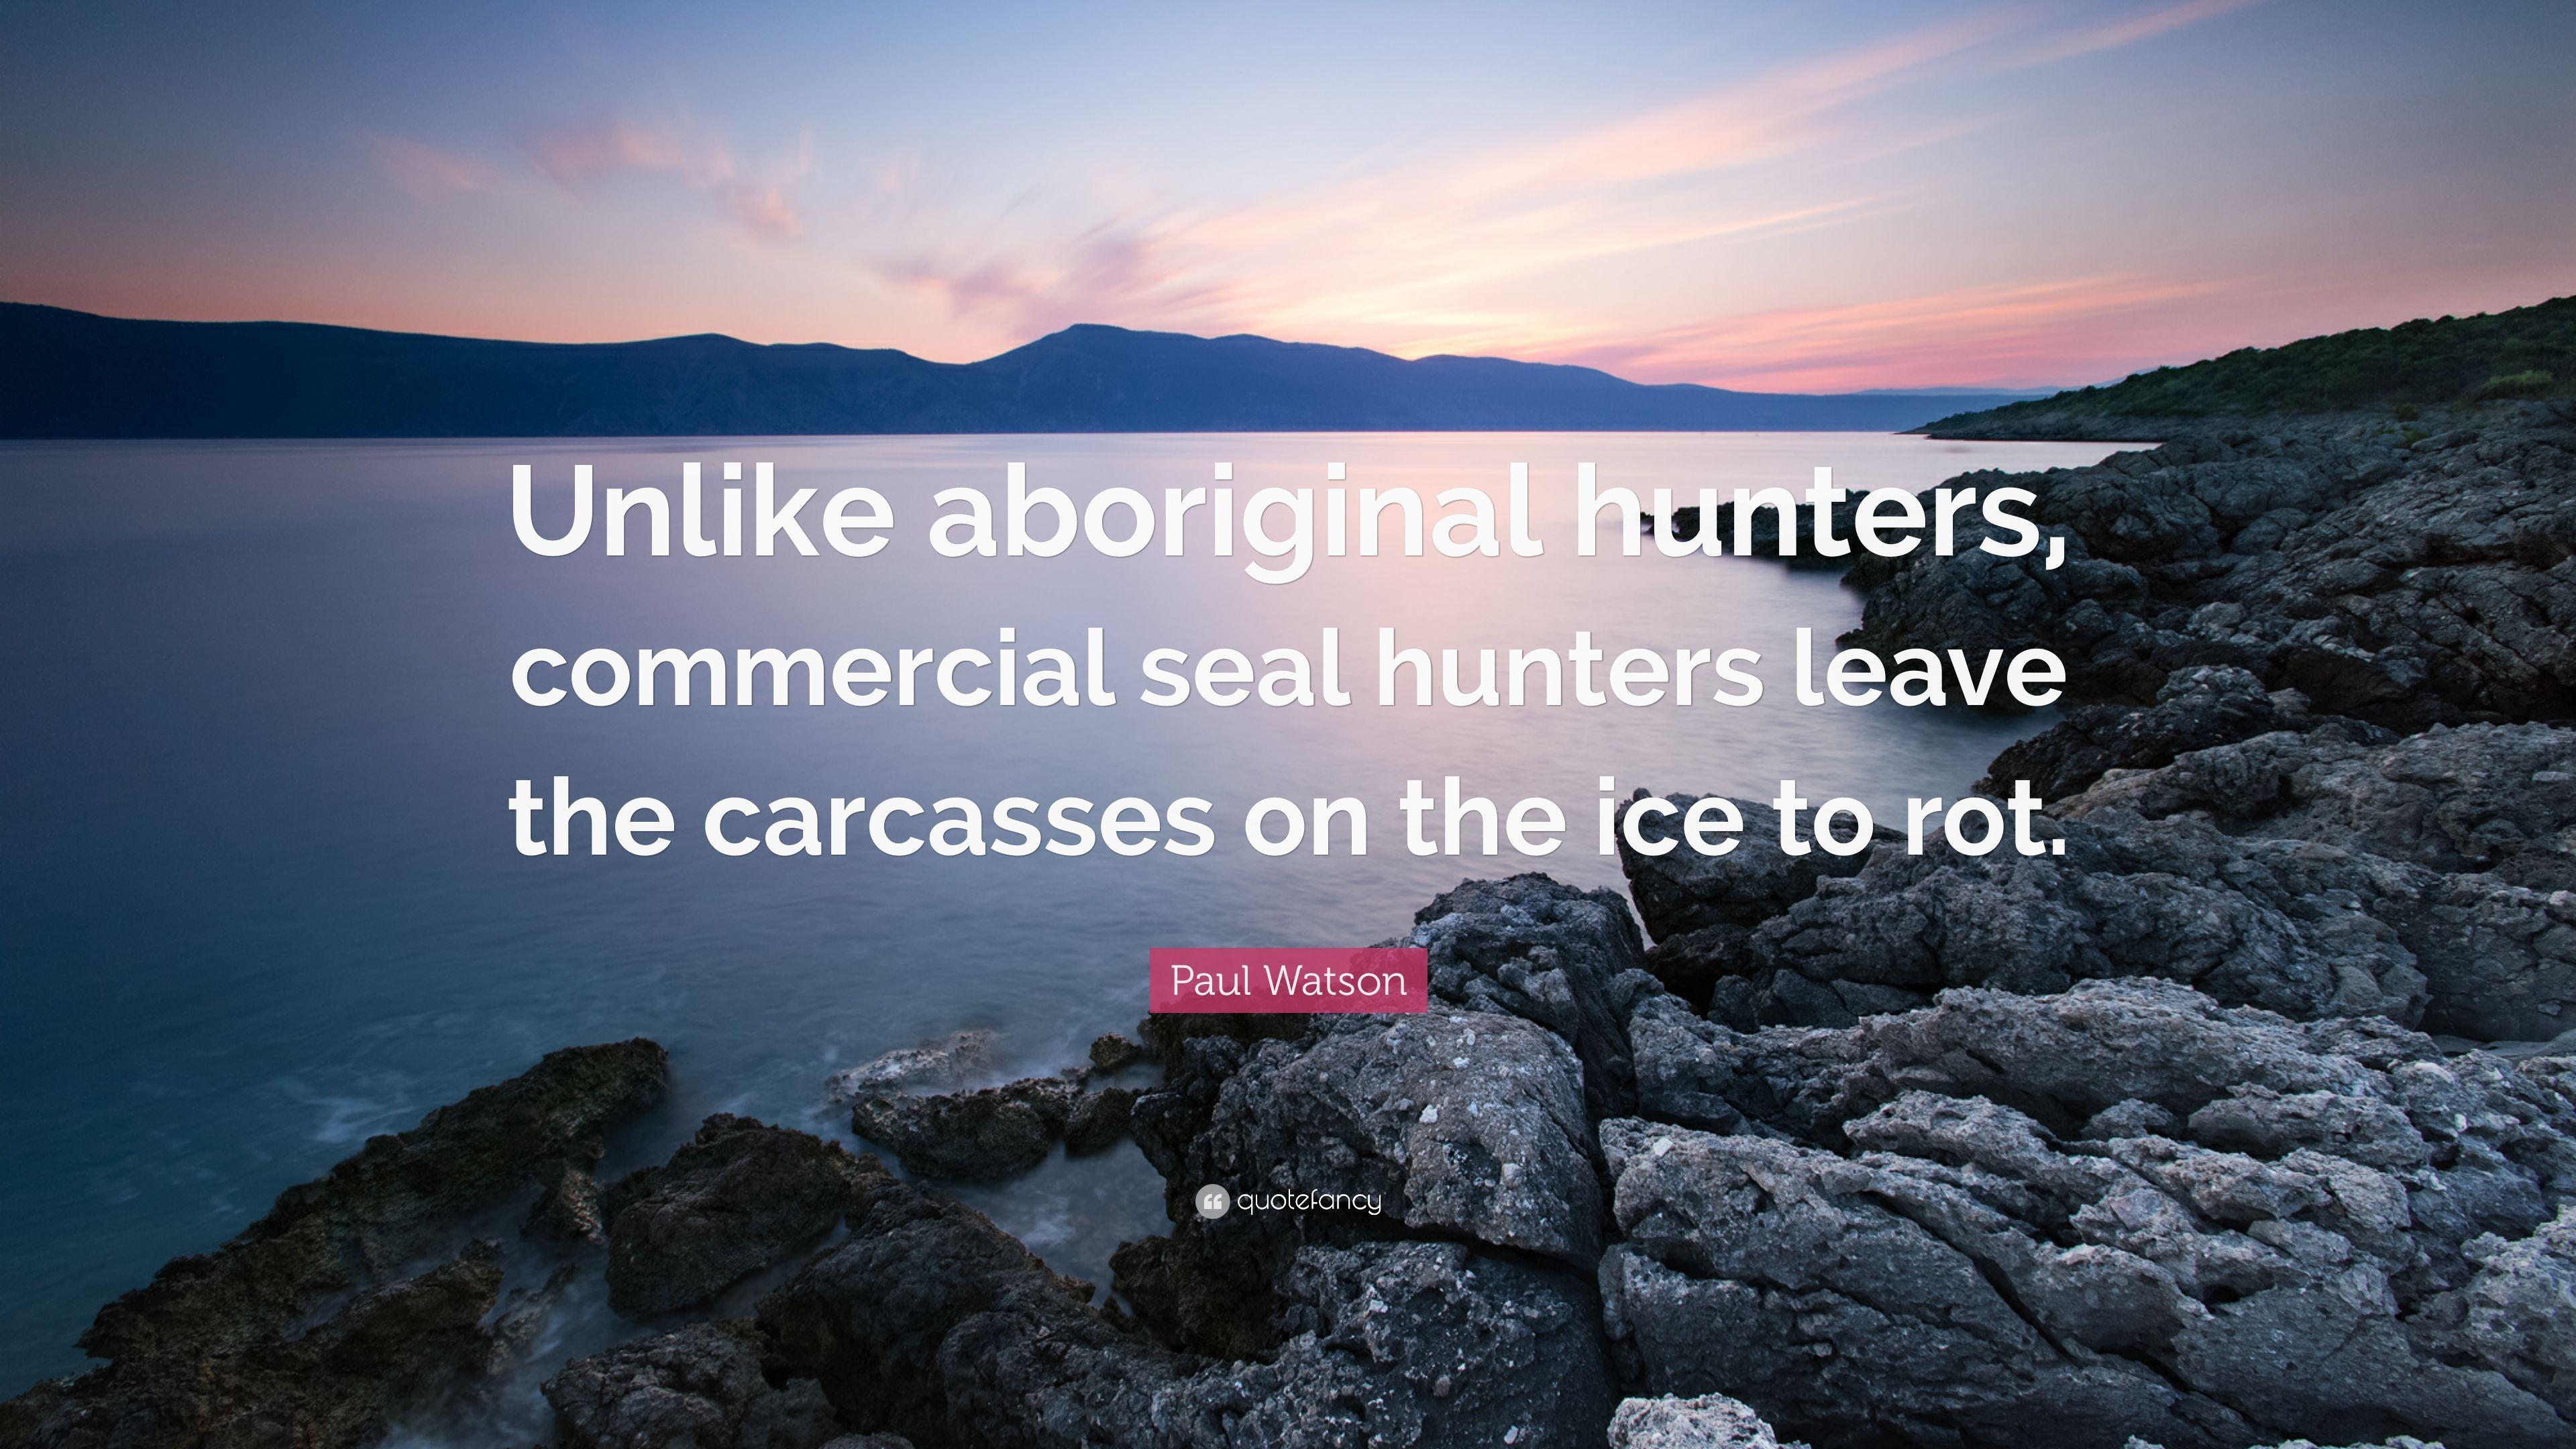 Paul Watson Quote: “Unlike aboriginal hunters, commercial seal